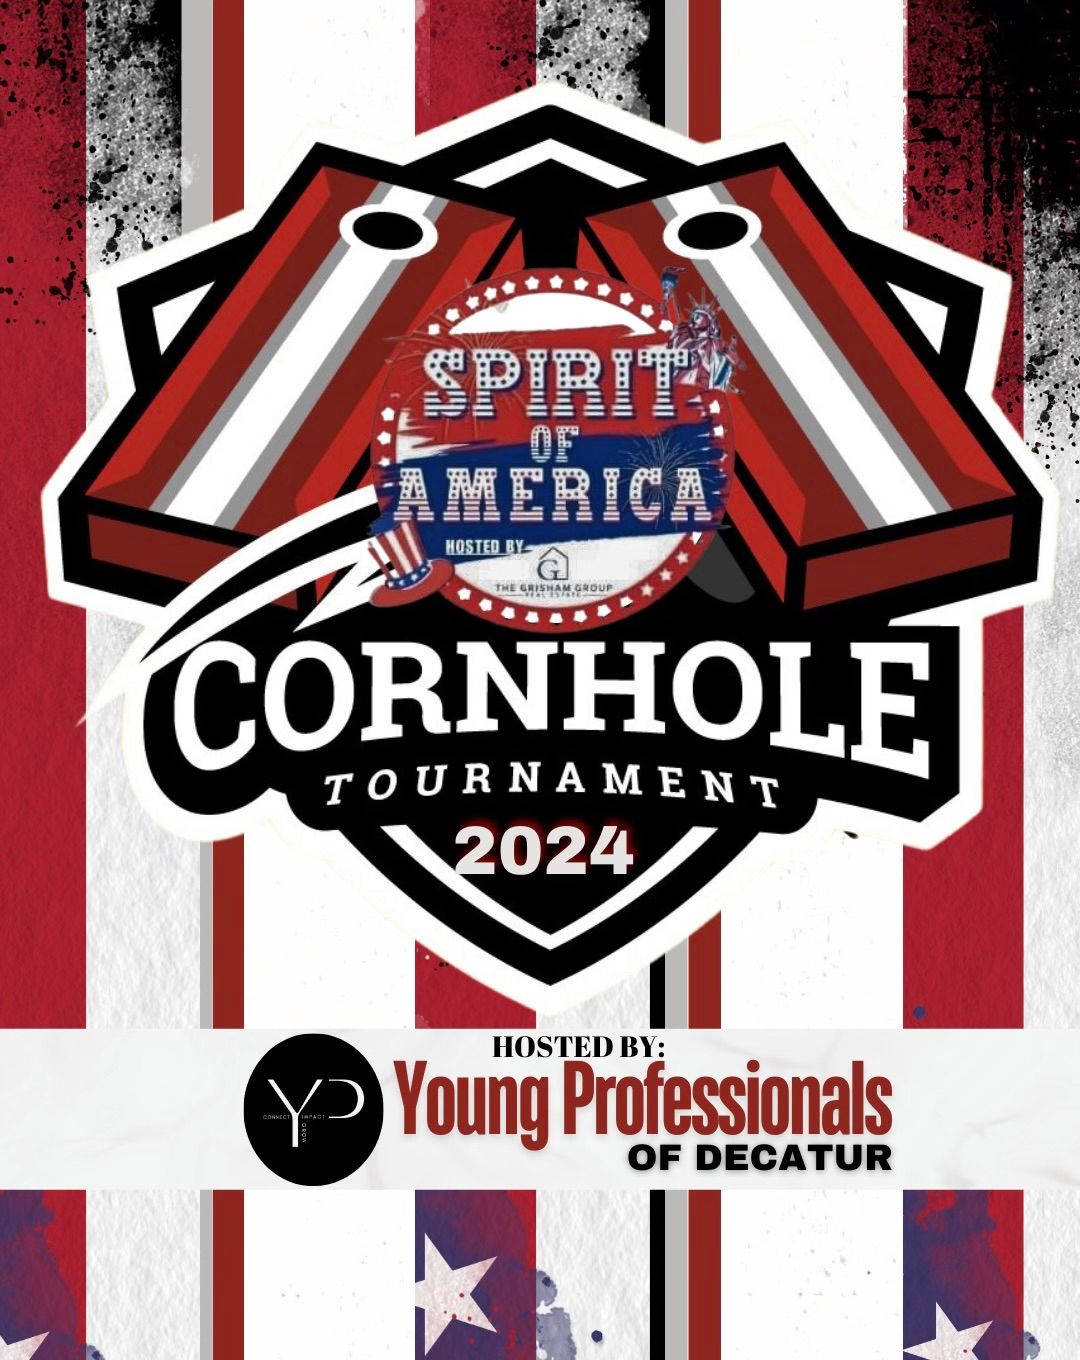 Spirit of America Corn hole Tournament benefiting YP Decatur